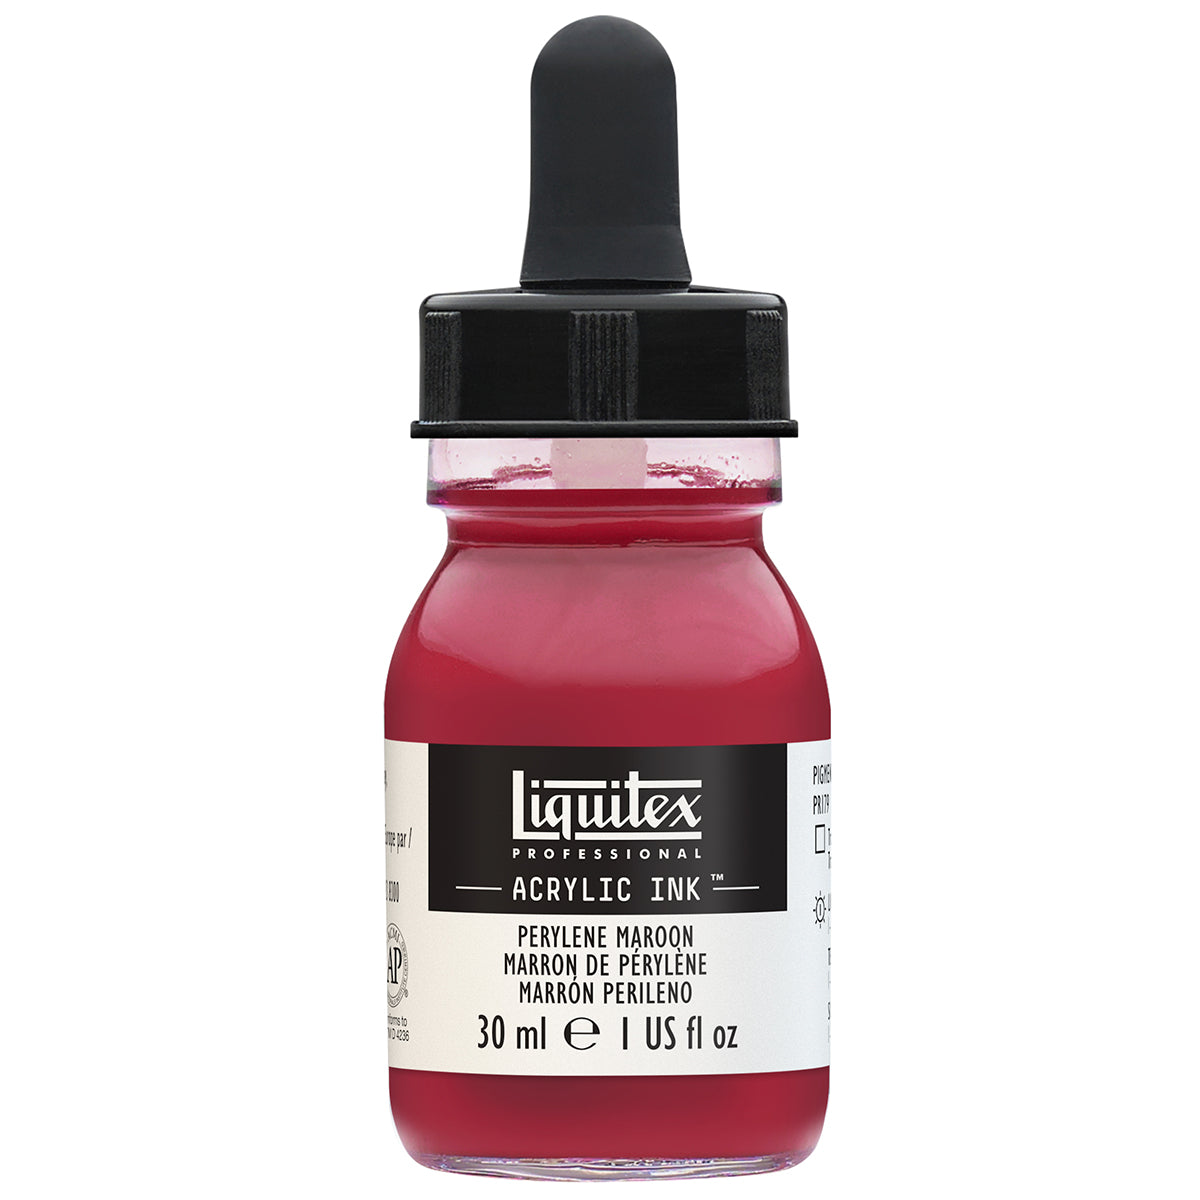 Liquitex - Acrylic Ink - 30ml Perylene Maroon